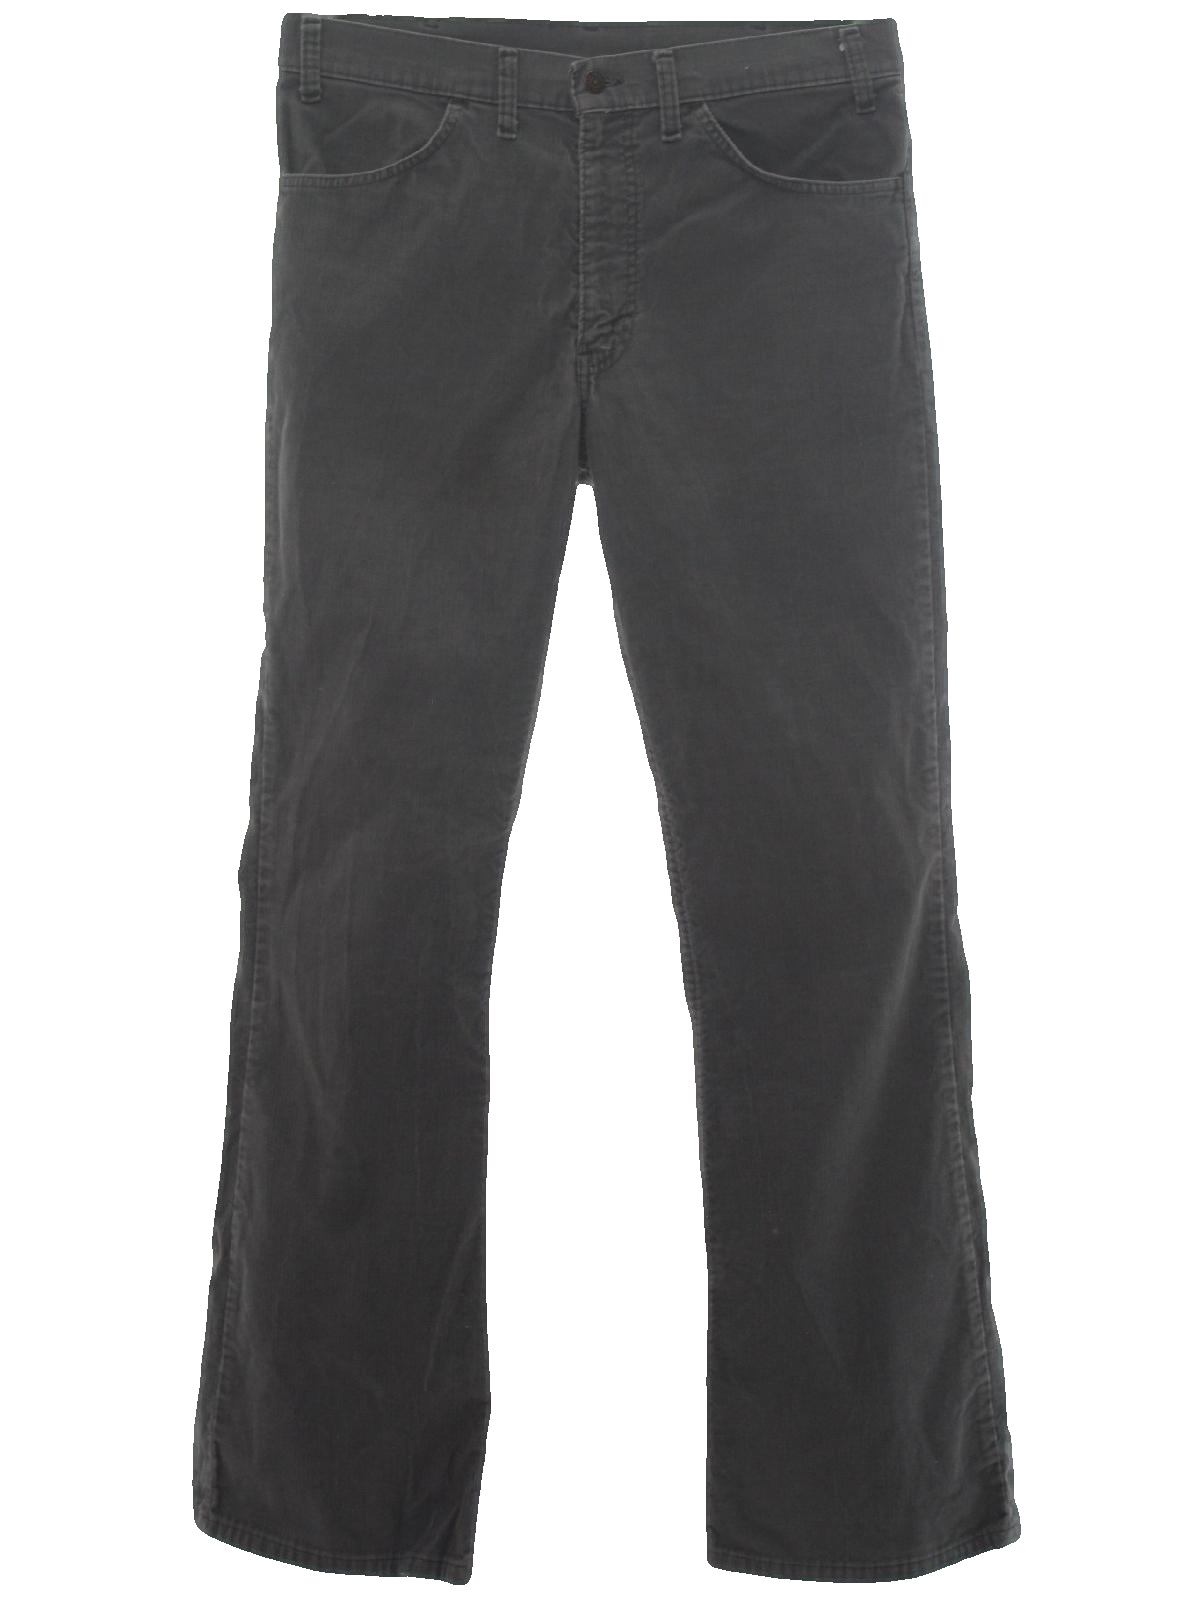 1970s Levis Flared Pants / Flares: 70s -Levis- Mens grey cotton ...